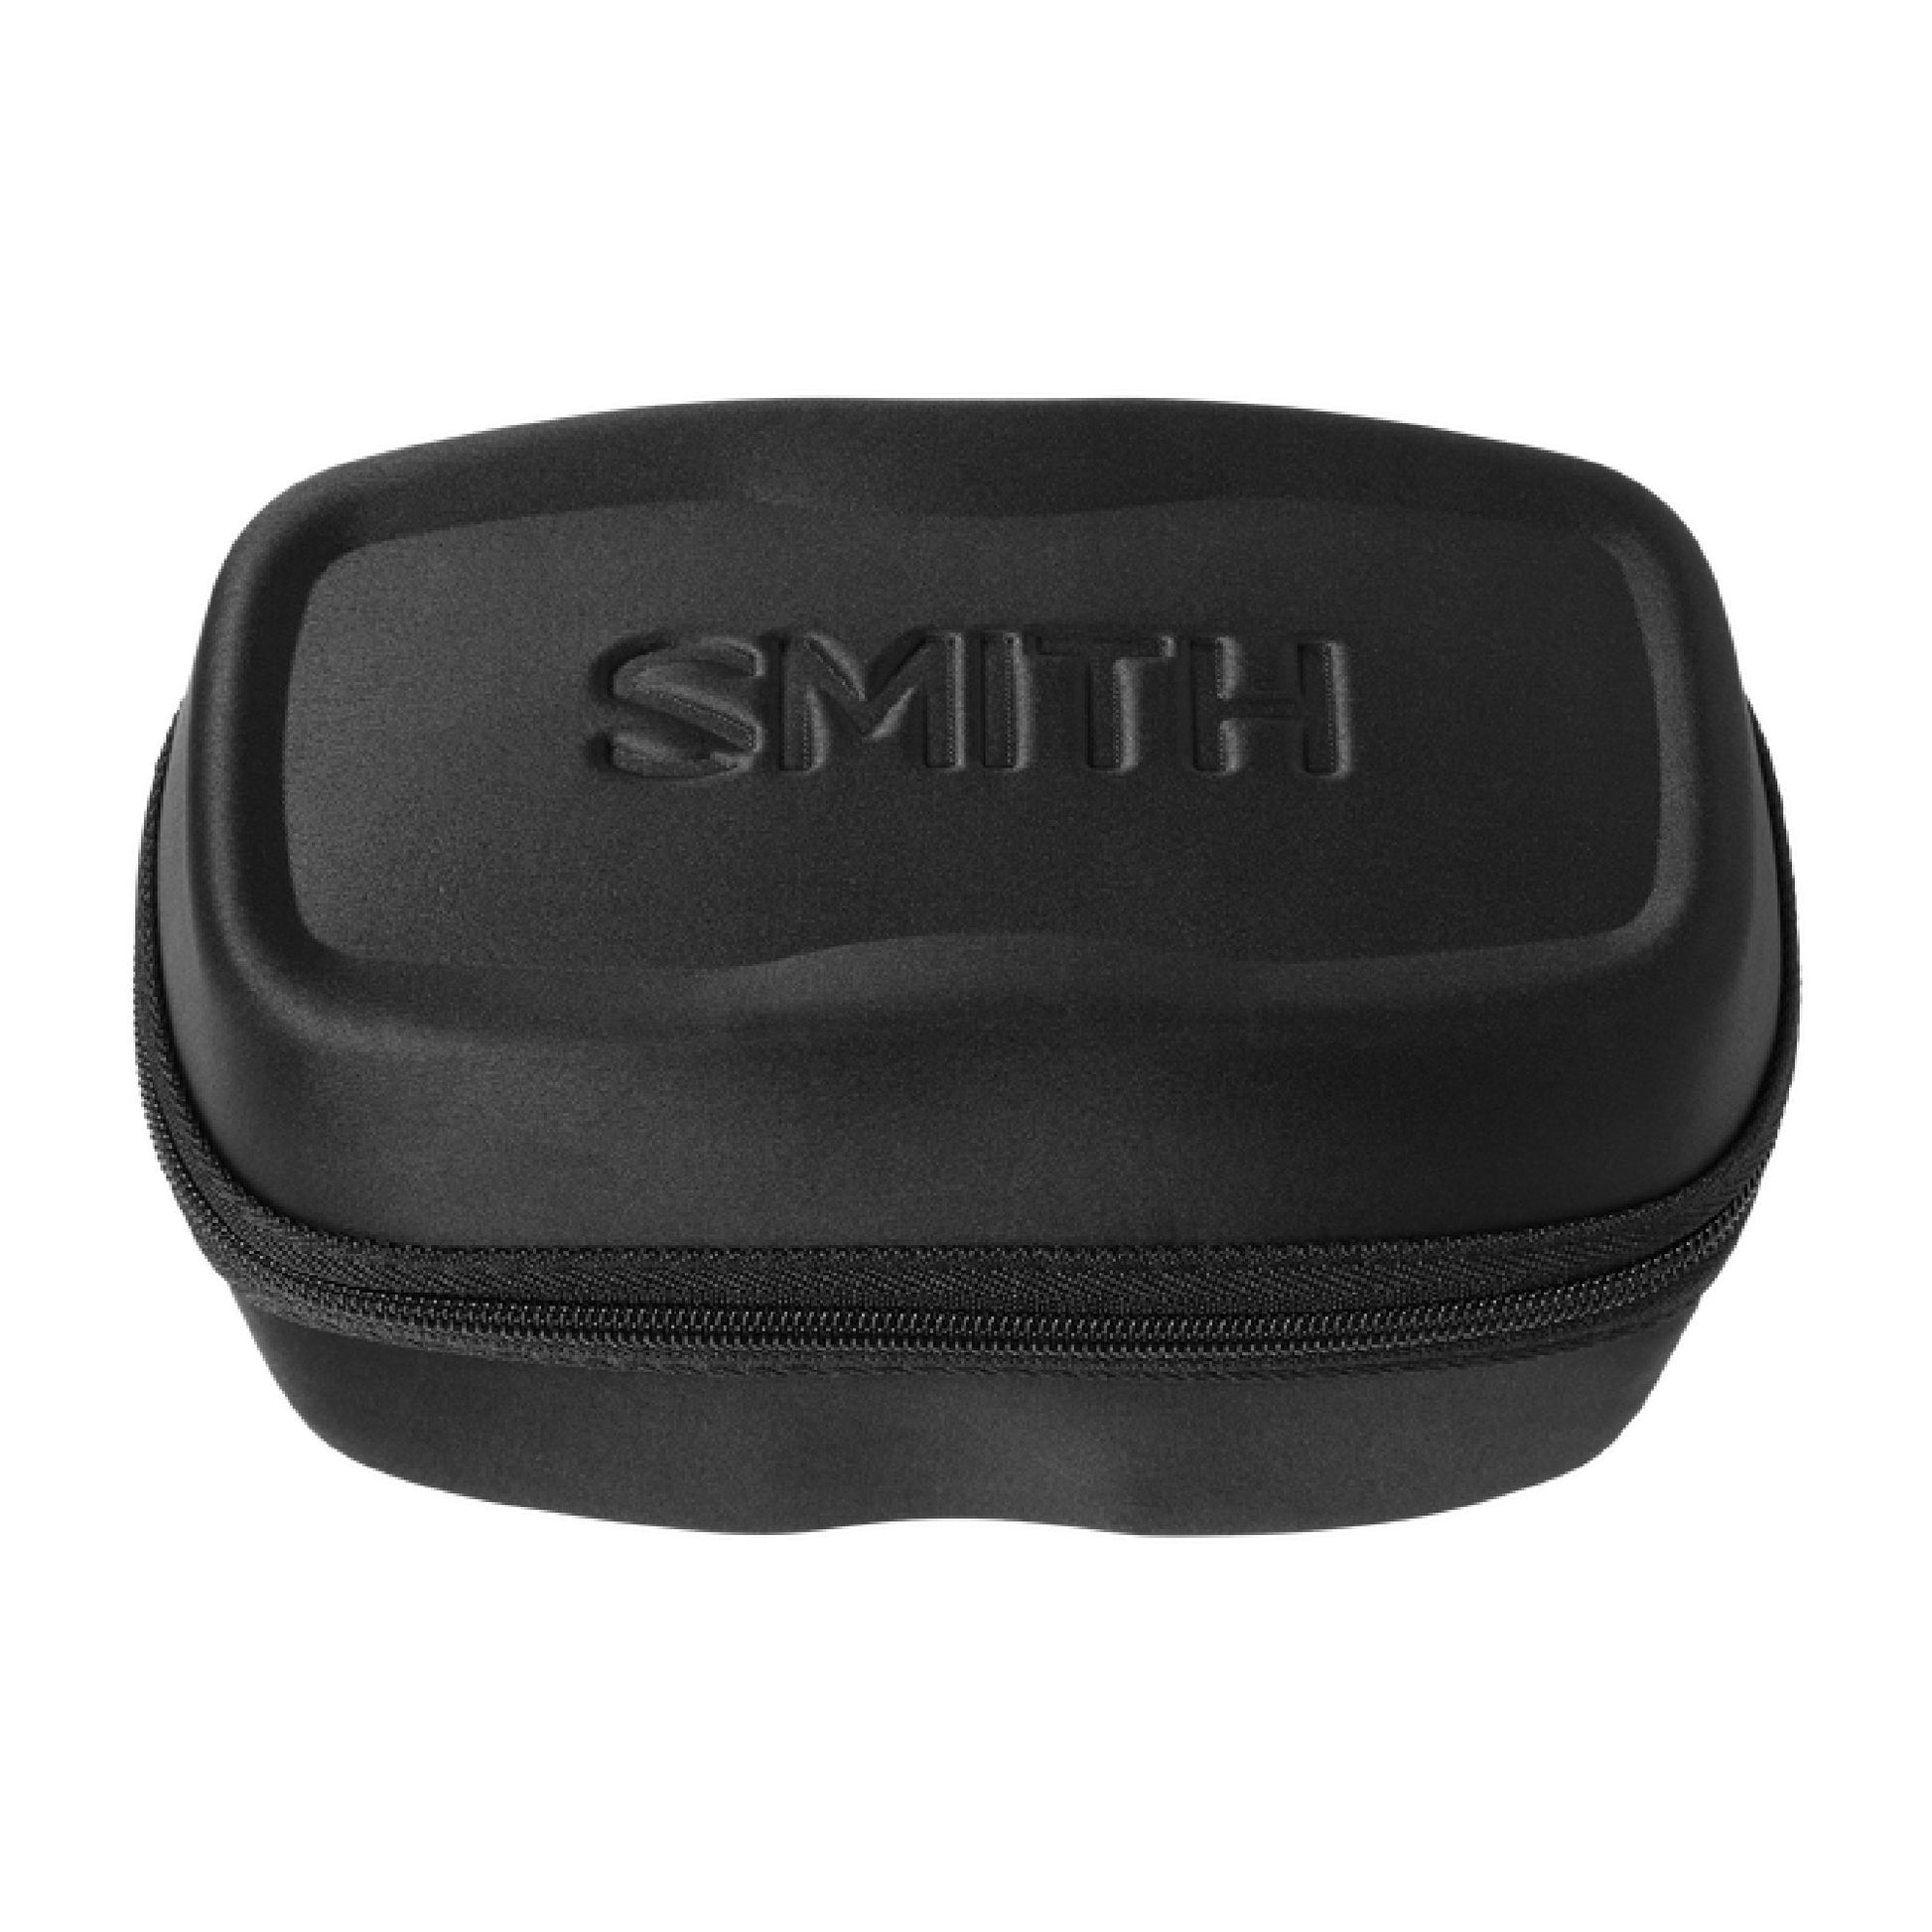 Smith 4D MAG Snow Goggle Black / ChromaPop Everyday Green Mirror Snow Goggles